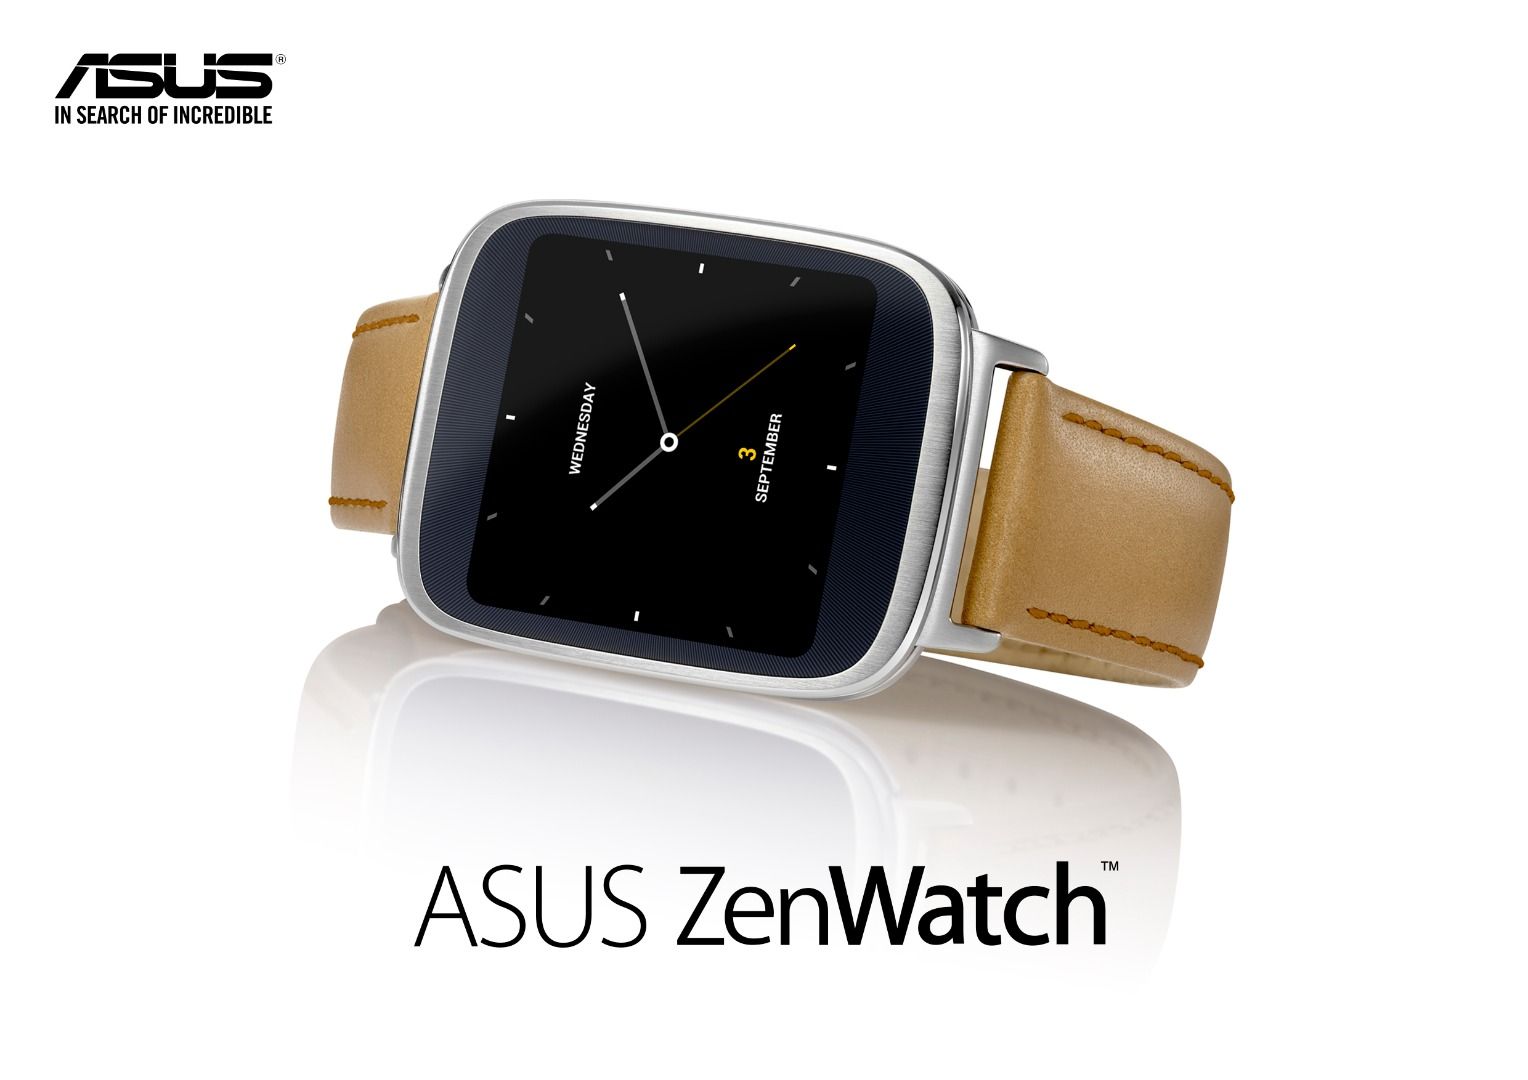 [IFA2014] เปิดตัว Asus ZenWatch นาฬิกา androidwear ที่มาพร้อม Zen UI